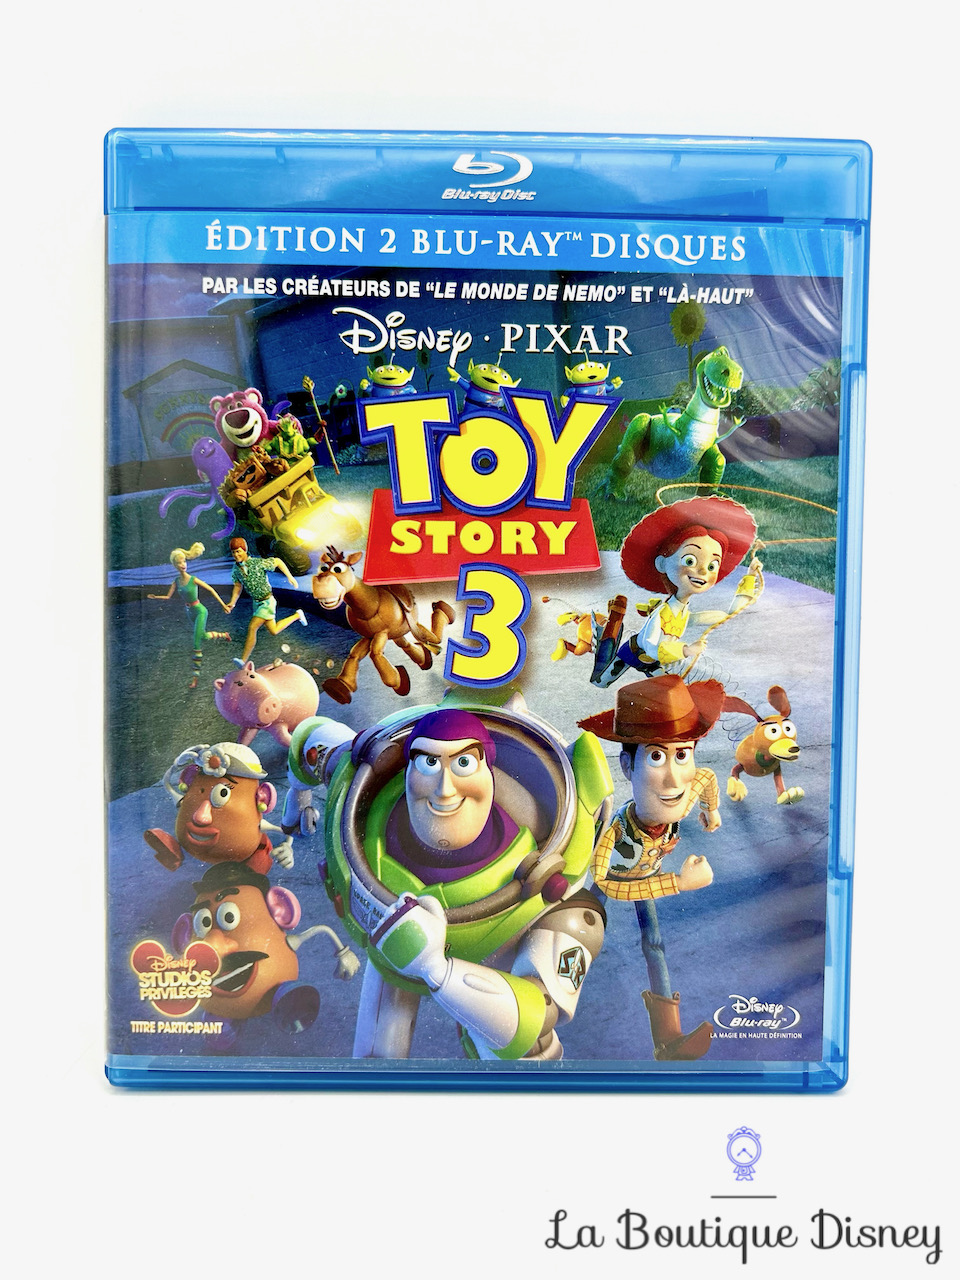 Blu Ray Toy Story 3 Disney Pixar Édition 2 disques DVD numéro 100